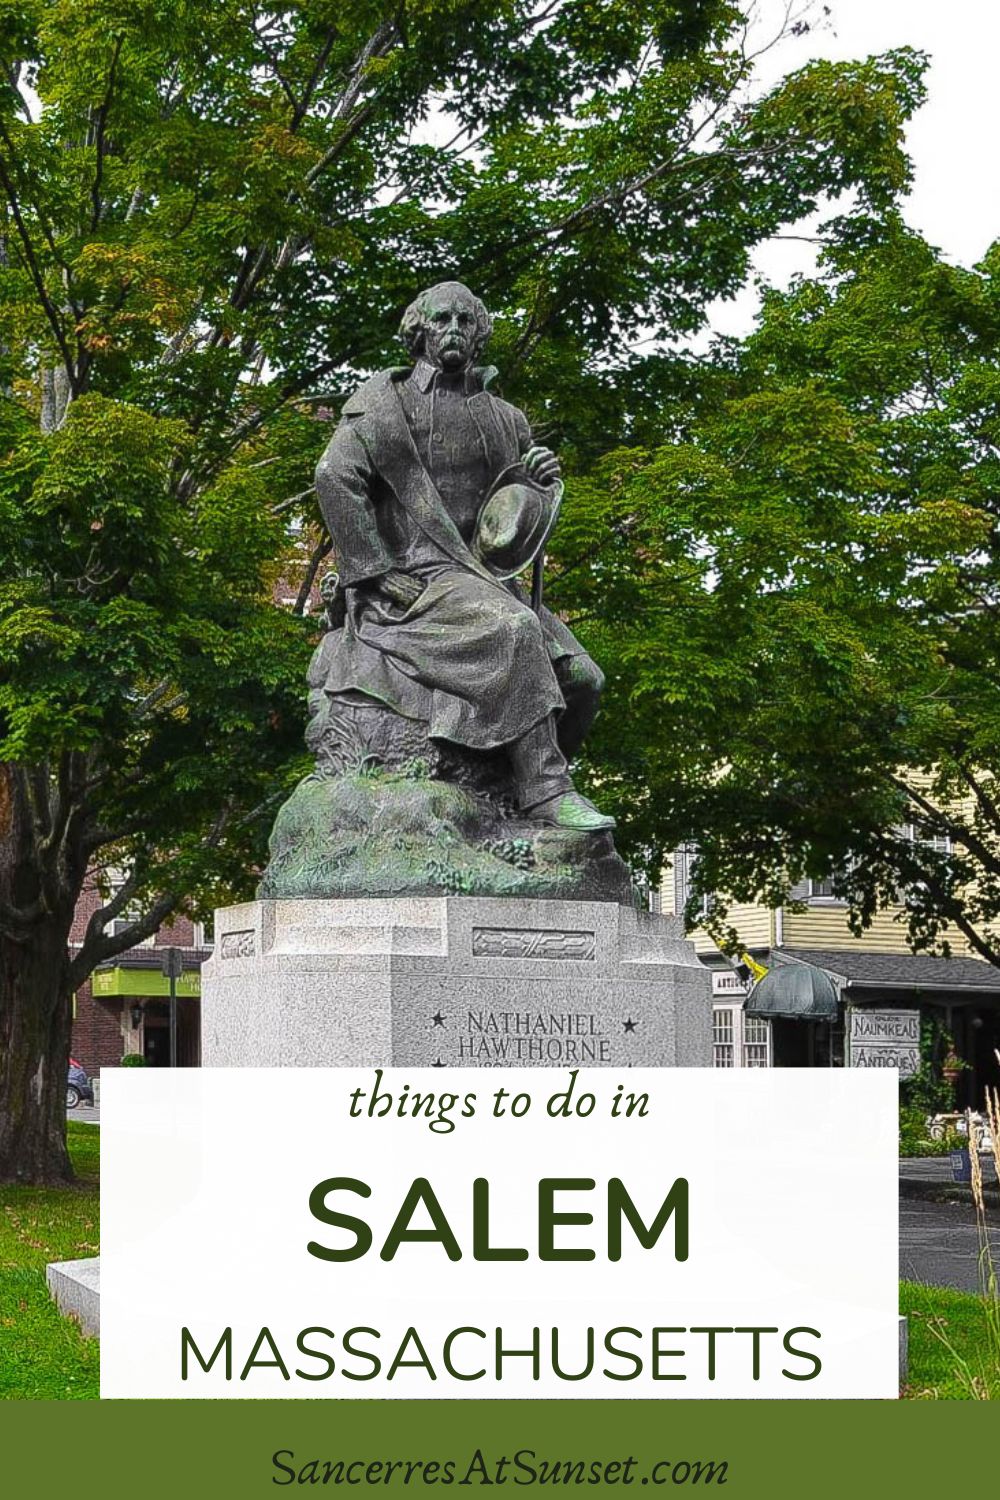 10 Things to do in Salem, Massachusetts